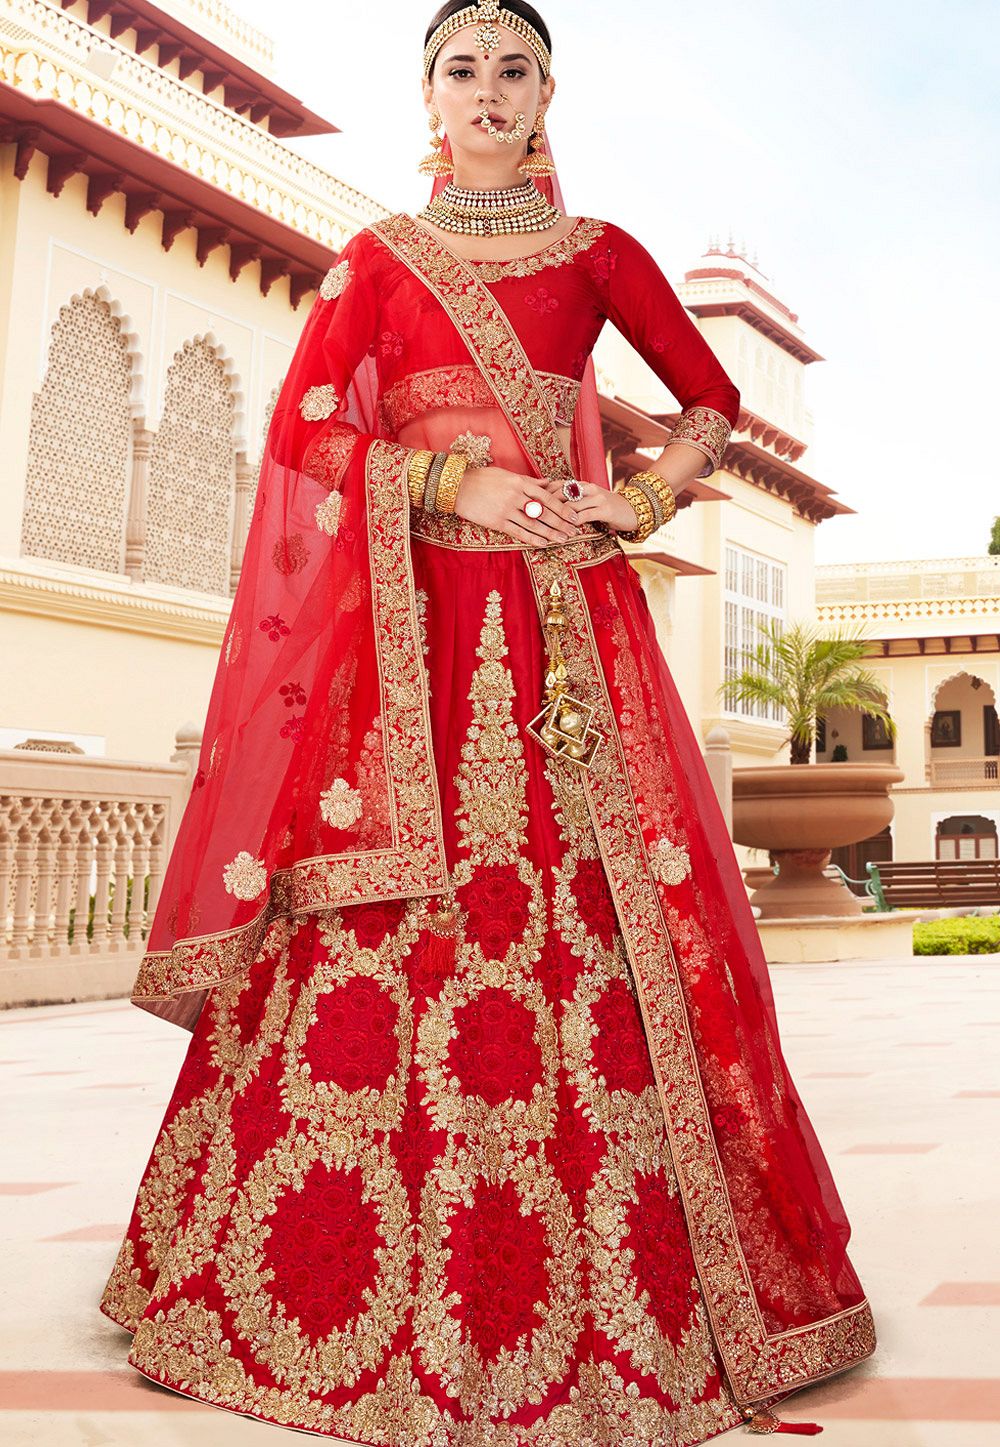 Indian Wedding Dress Red Ubicaciondepersonas Cdmx Gob Mx